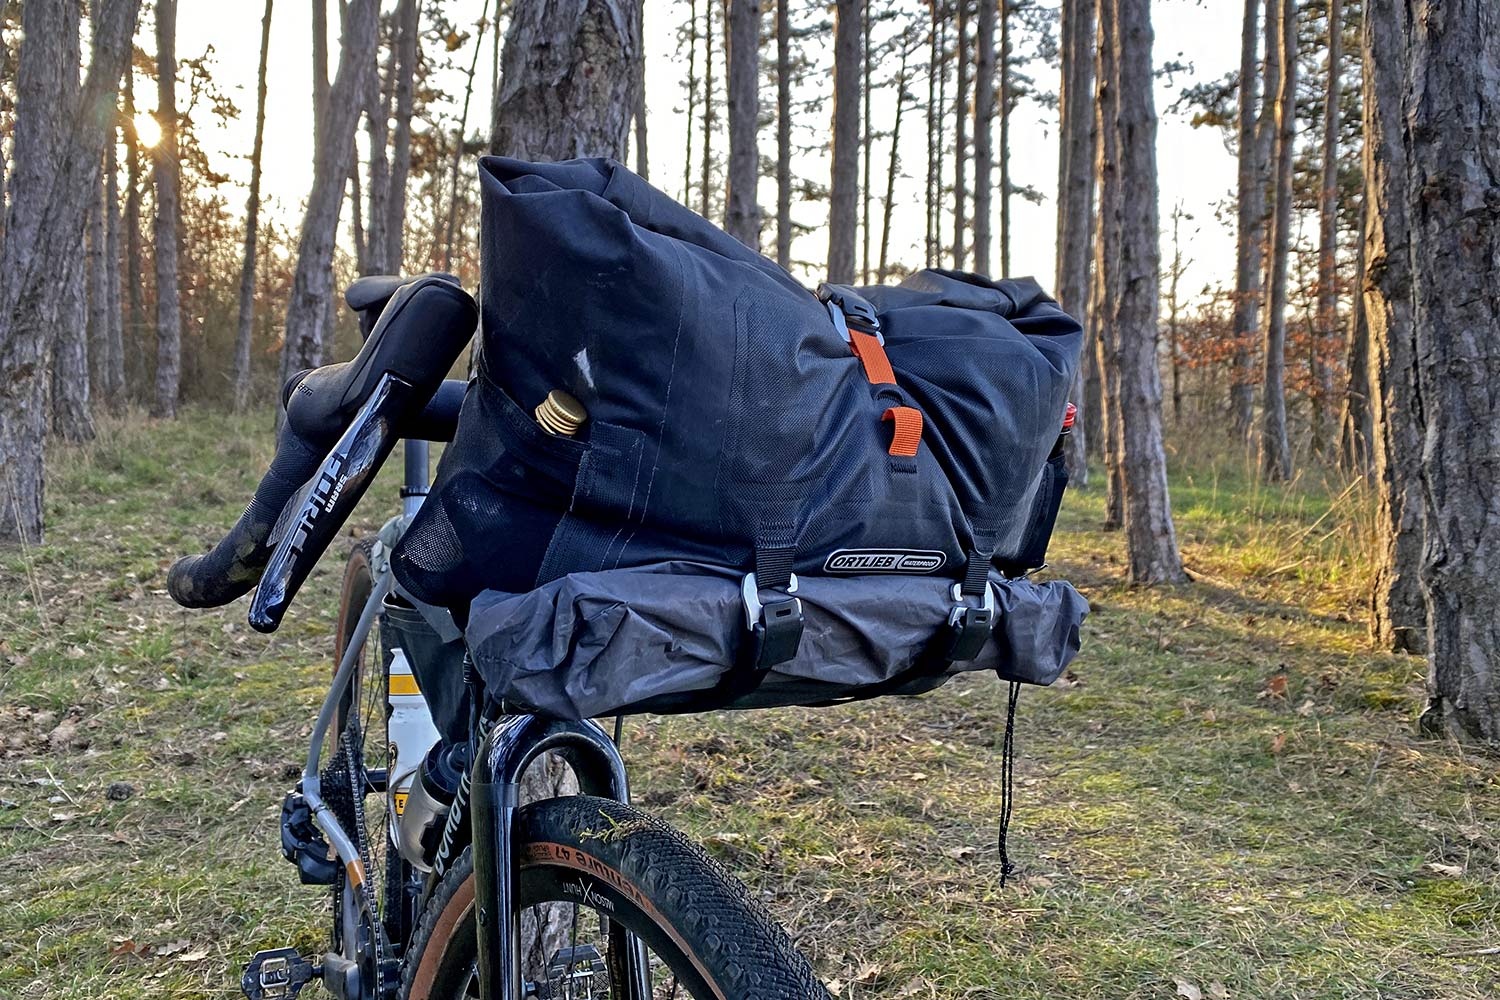 Ortlieb Handlebar Pack QR, made-in-Germany waterproof quick release 11L bikepacking bar bag, packed